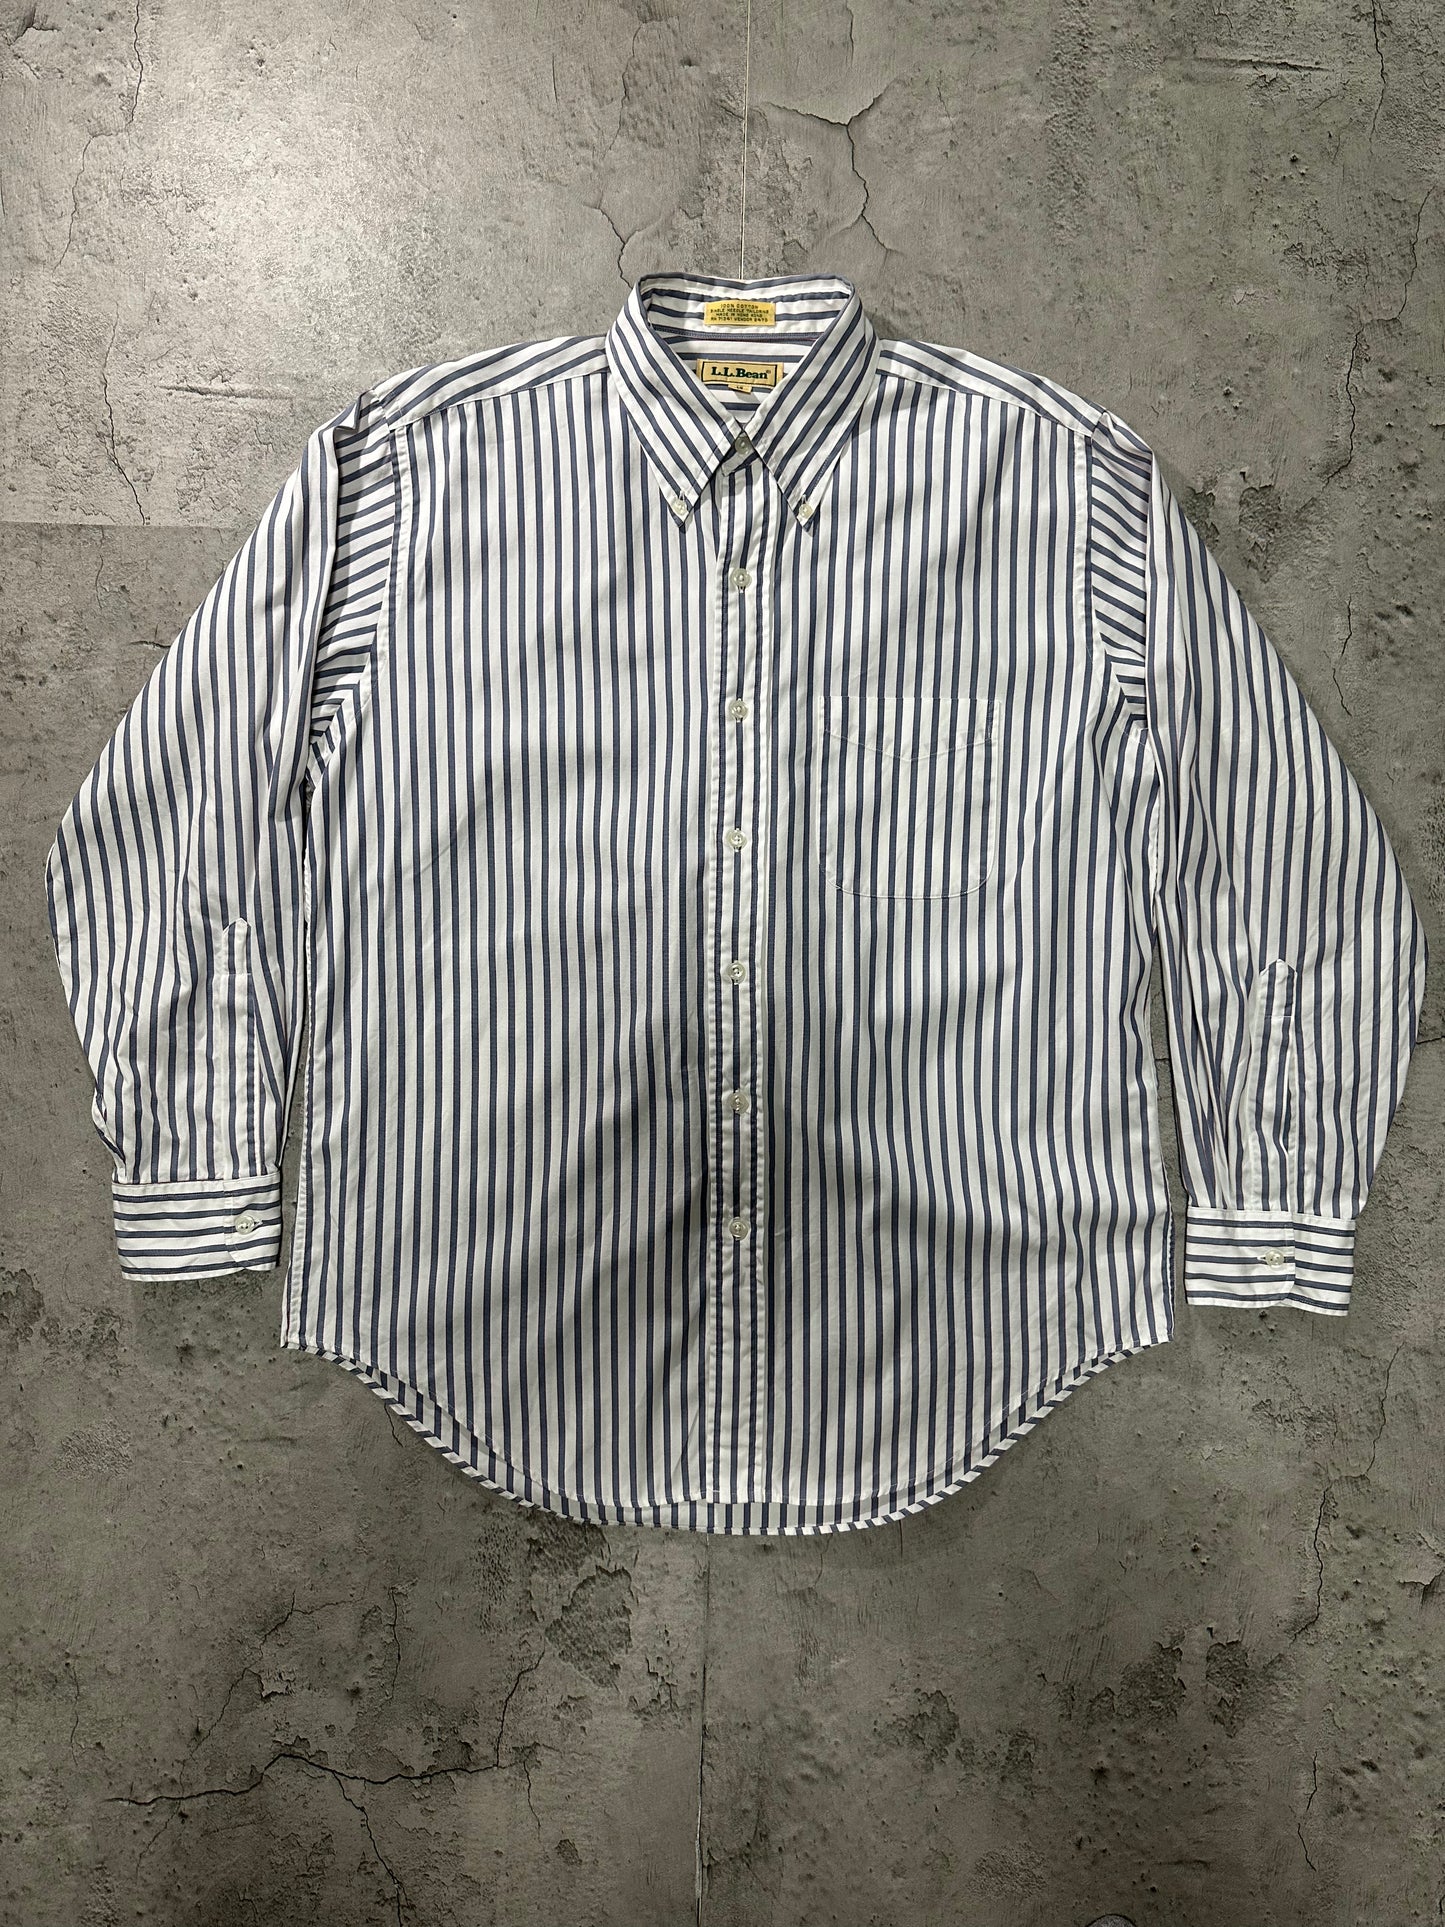 tricolor striped shirt